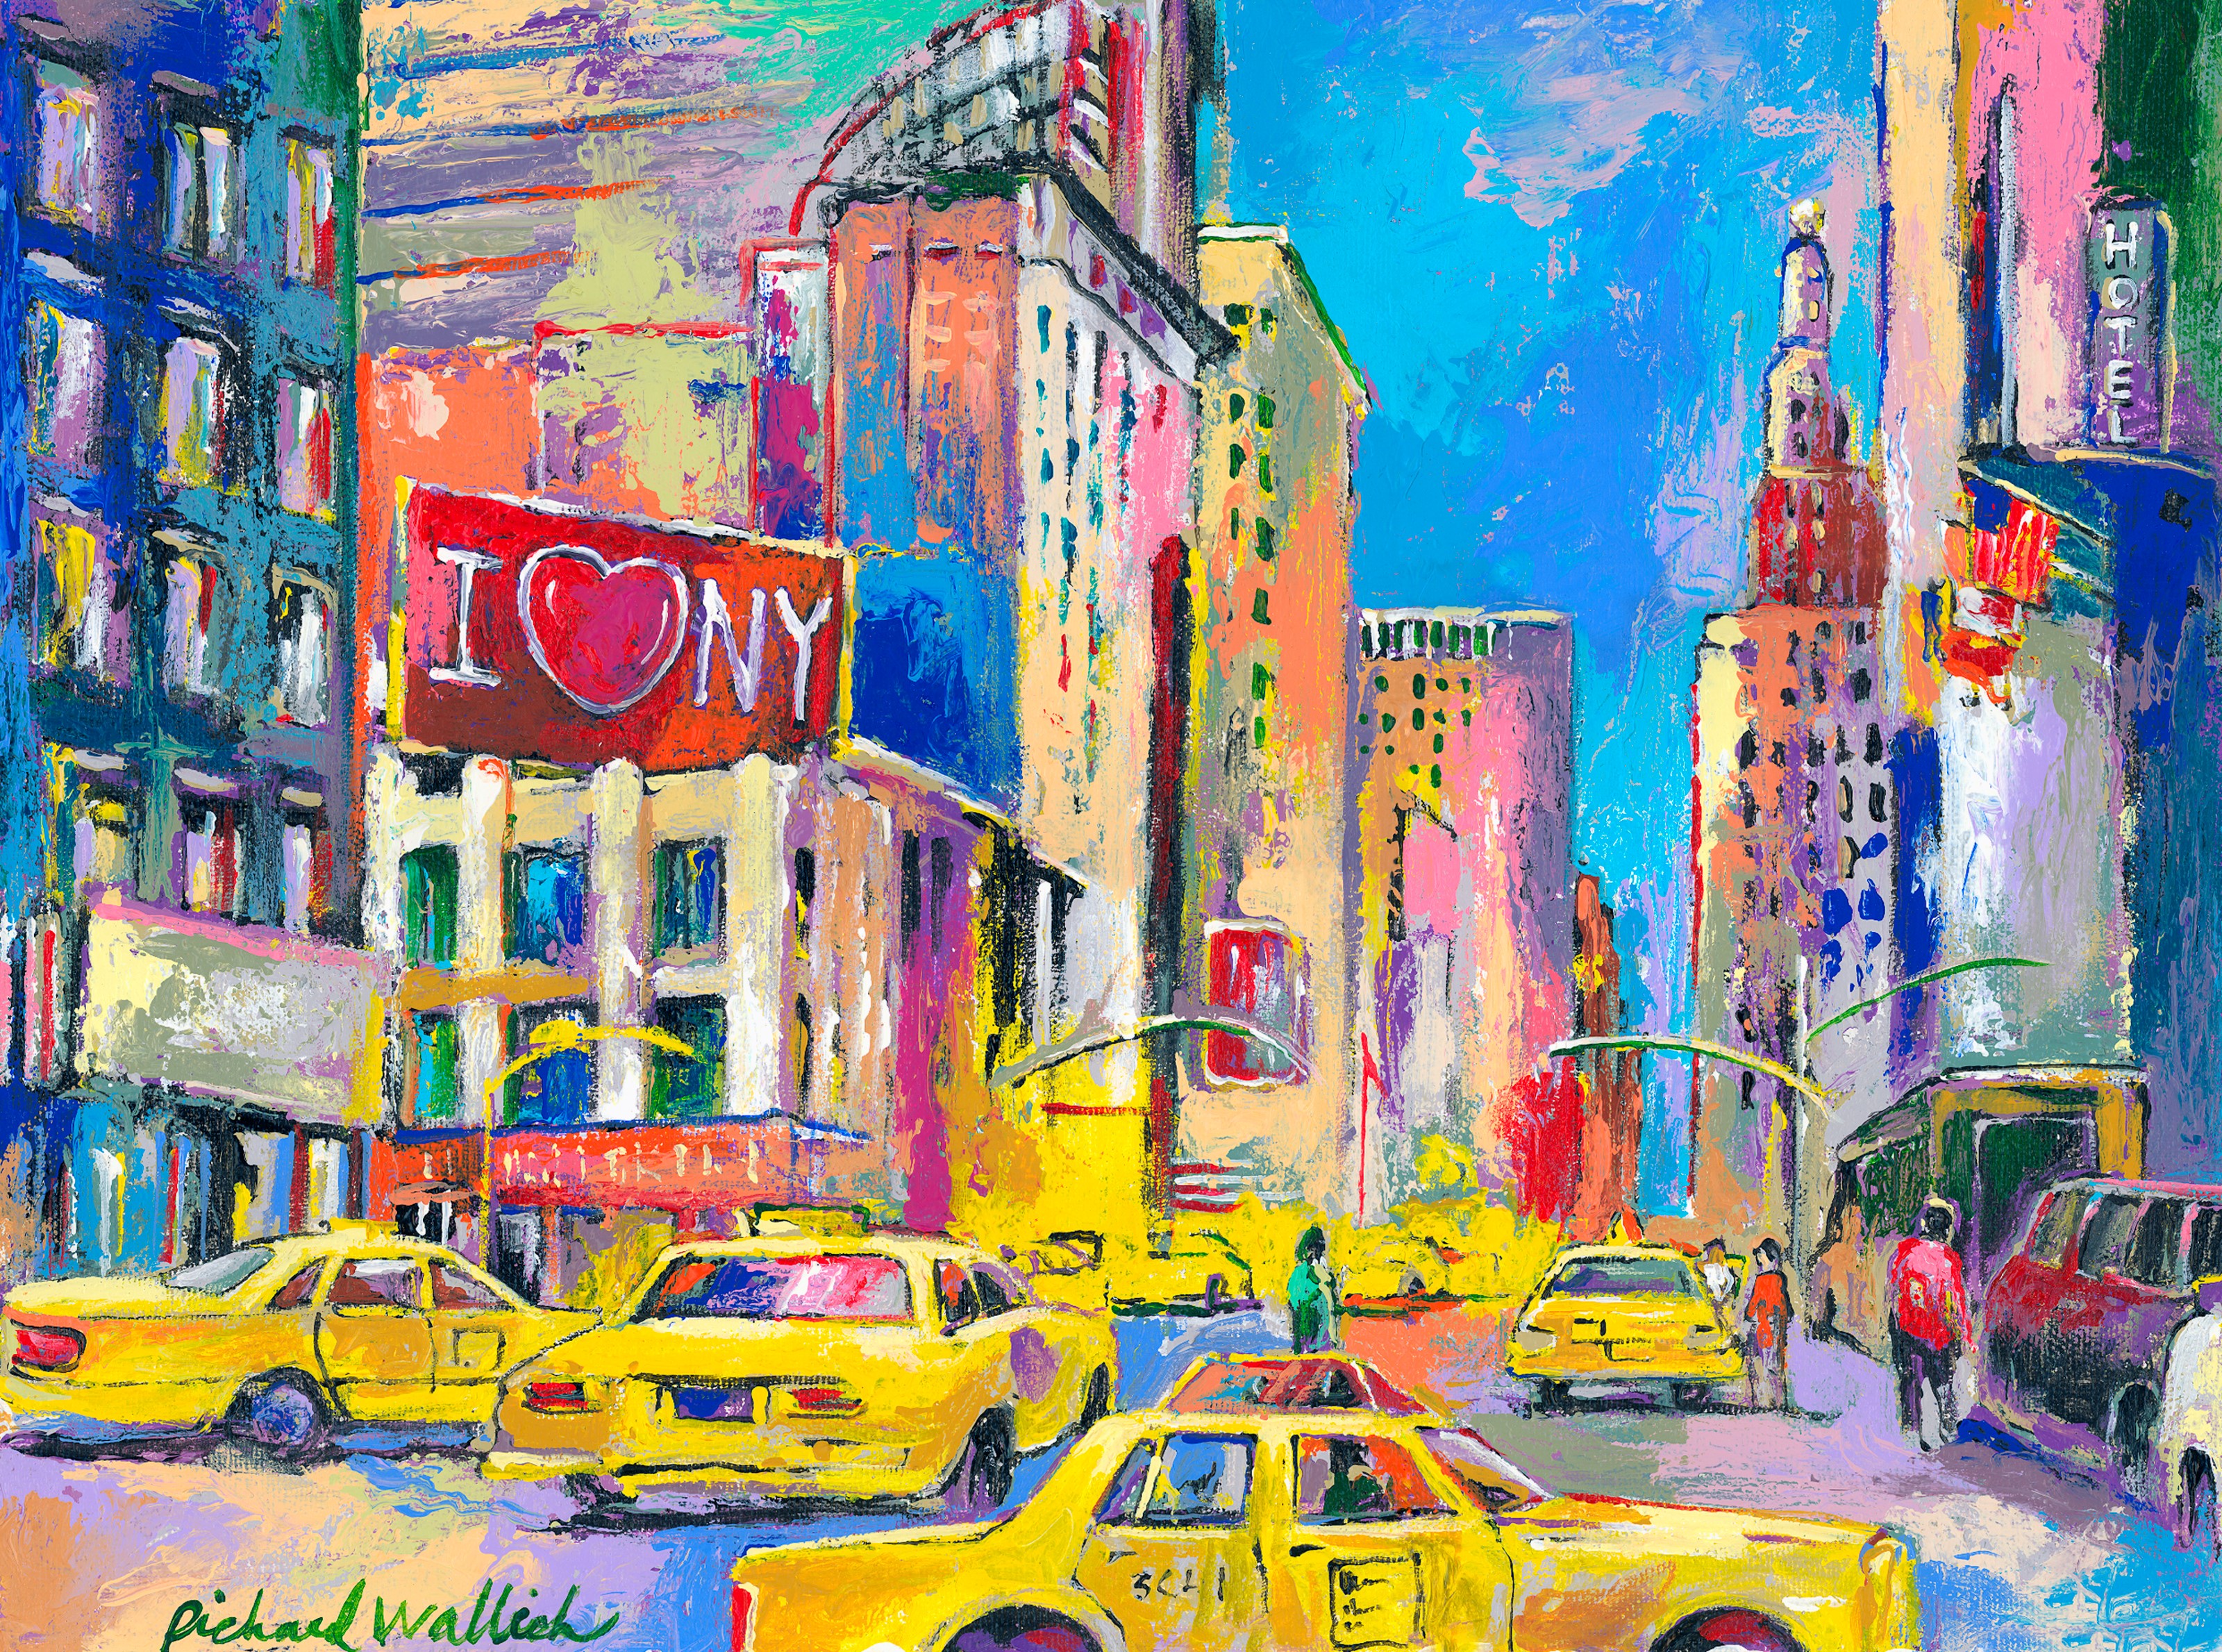 New York Taxi Your Way Mural Murals - Wallpaper